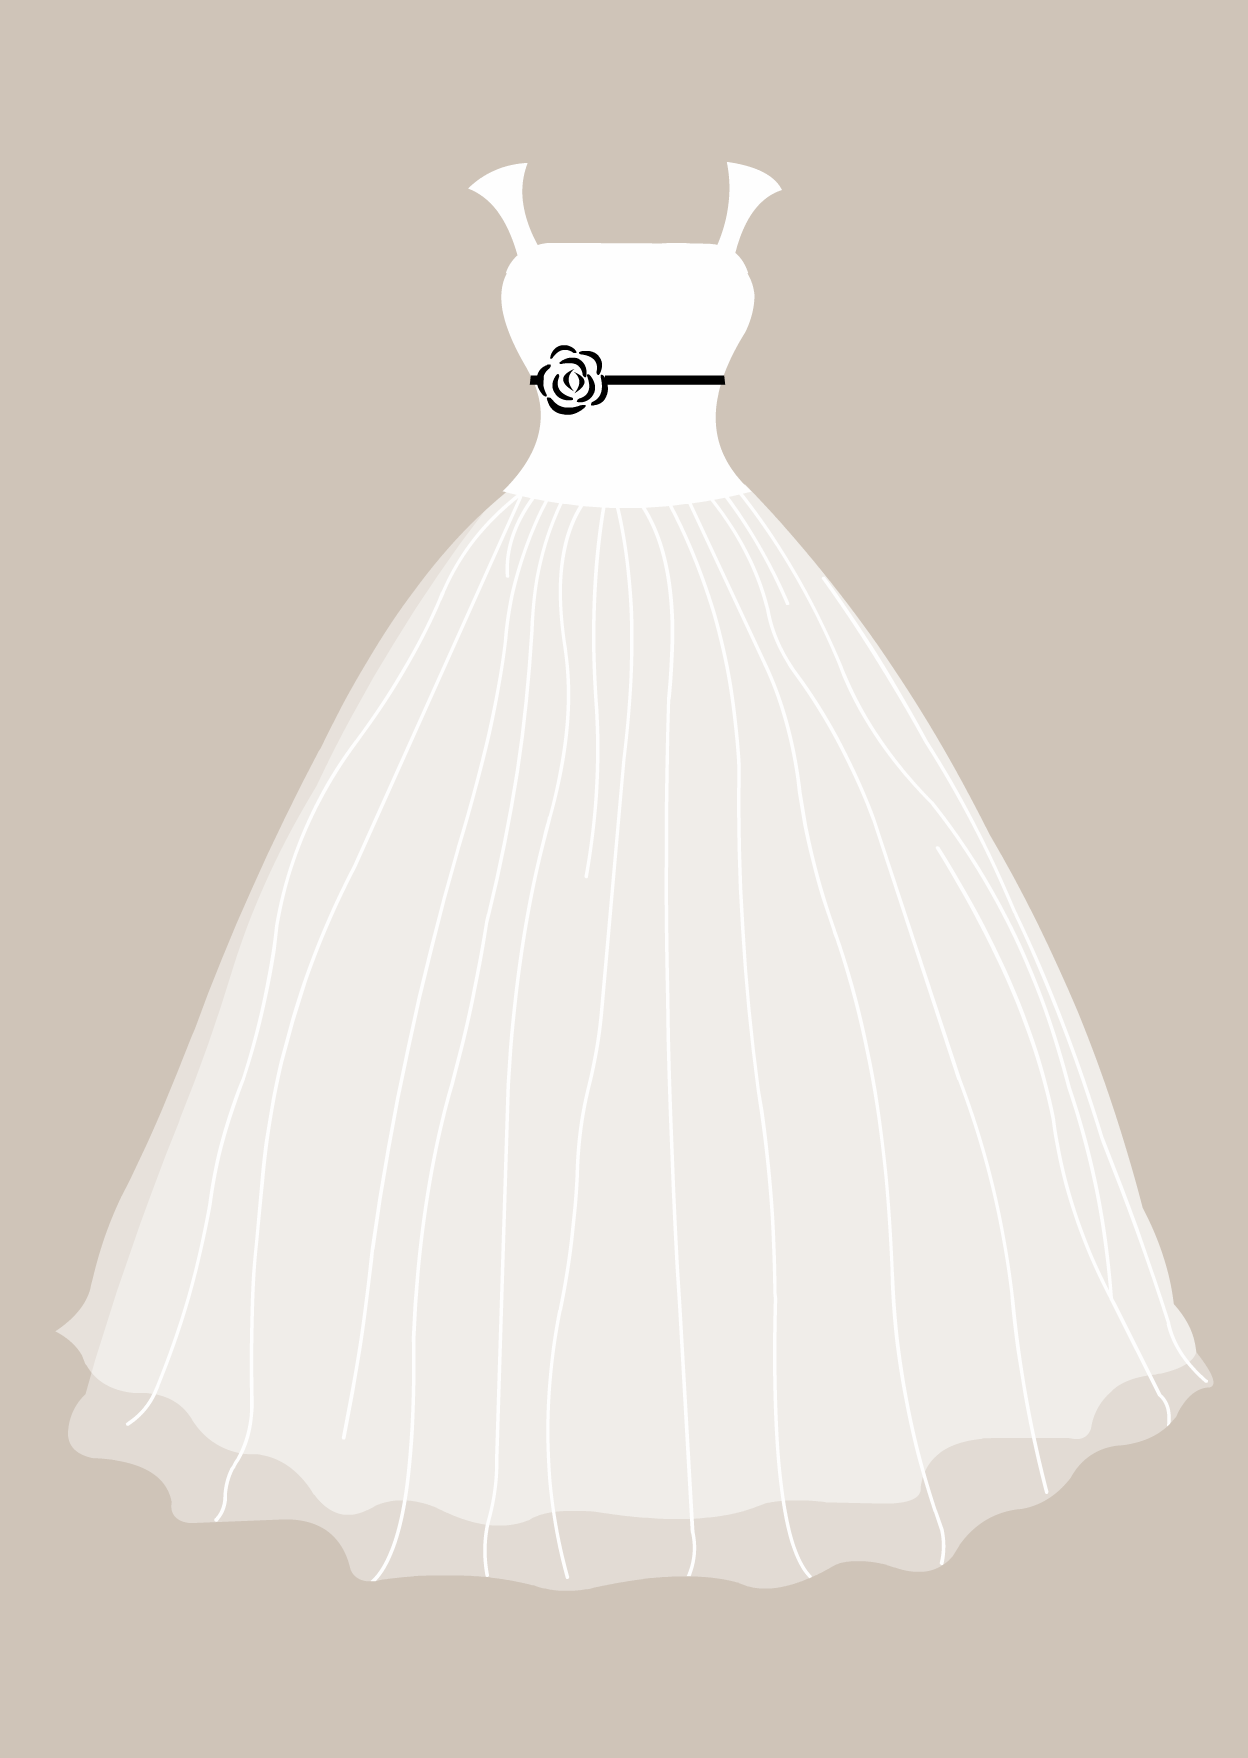 Pin Dress Clipart Wedding Dress #6 - Wedding Dress And Tux, Transparent background PNG HD thumbnail